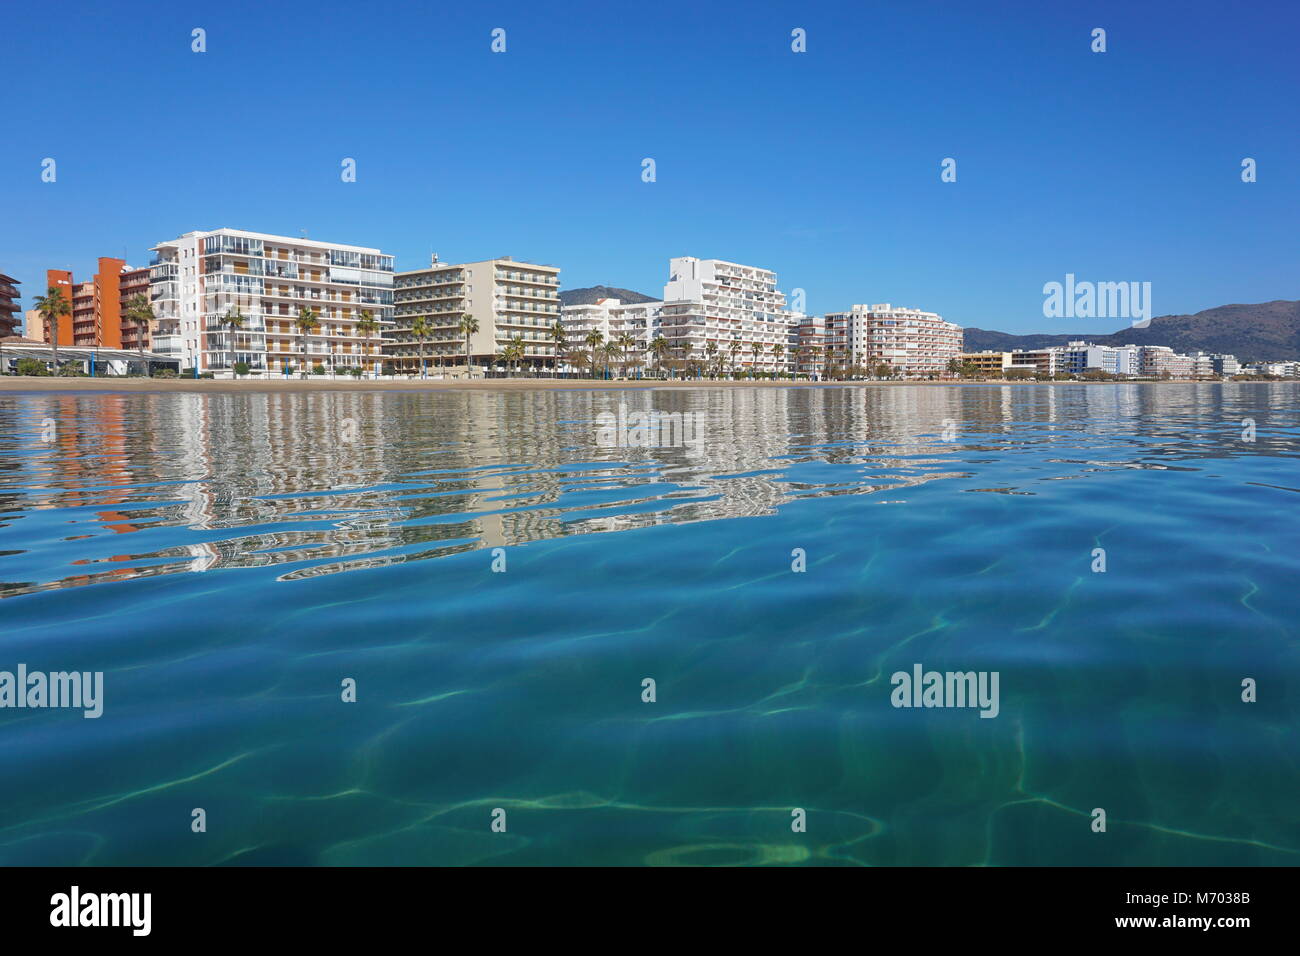 Spain Costa Brava seaside town, apartment buildings on the beachfront, Mediterranean sea, Santa Margarida, Roses, Catalonia, Girona Stock Photo